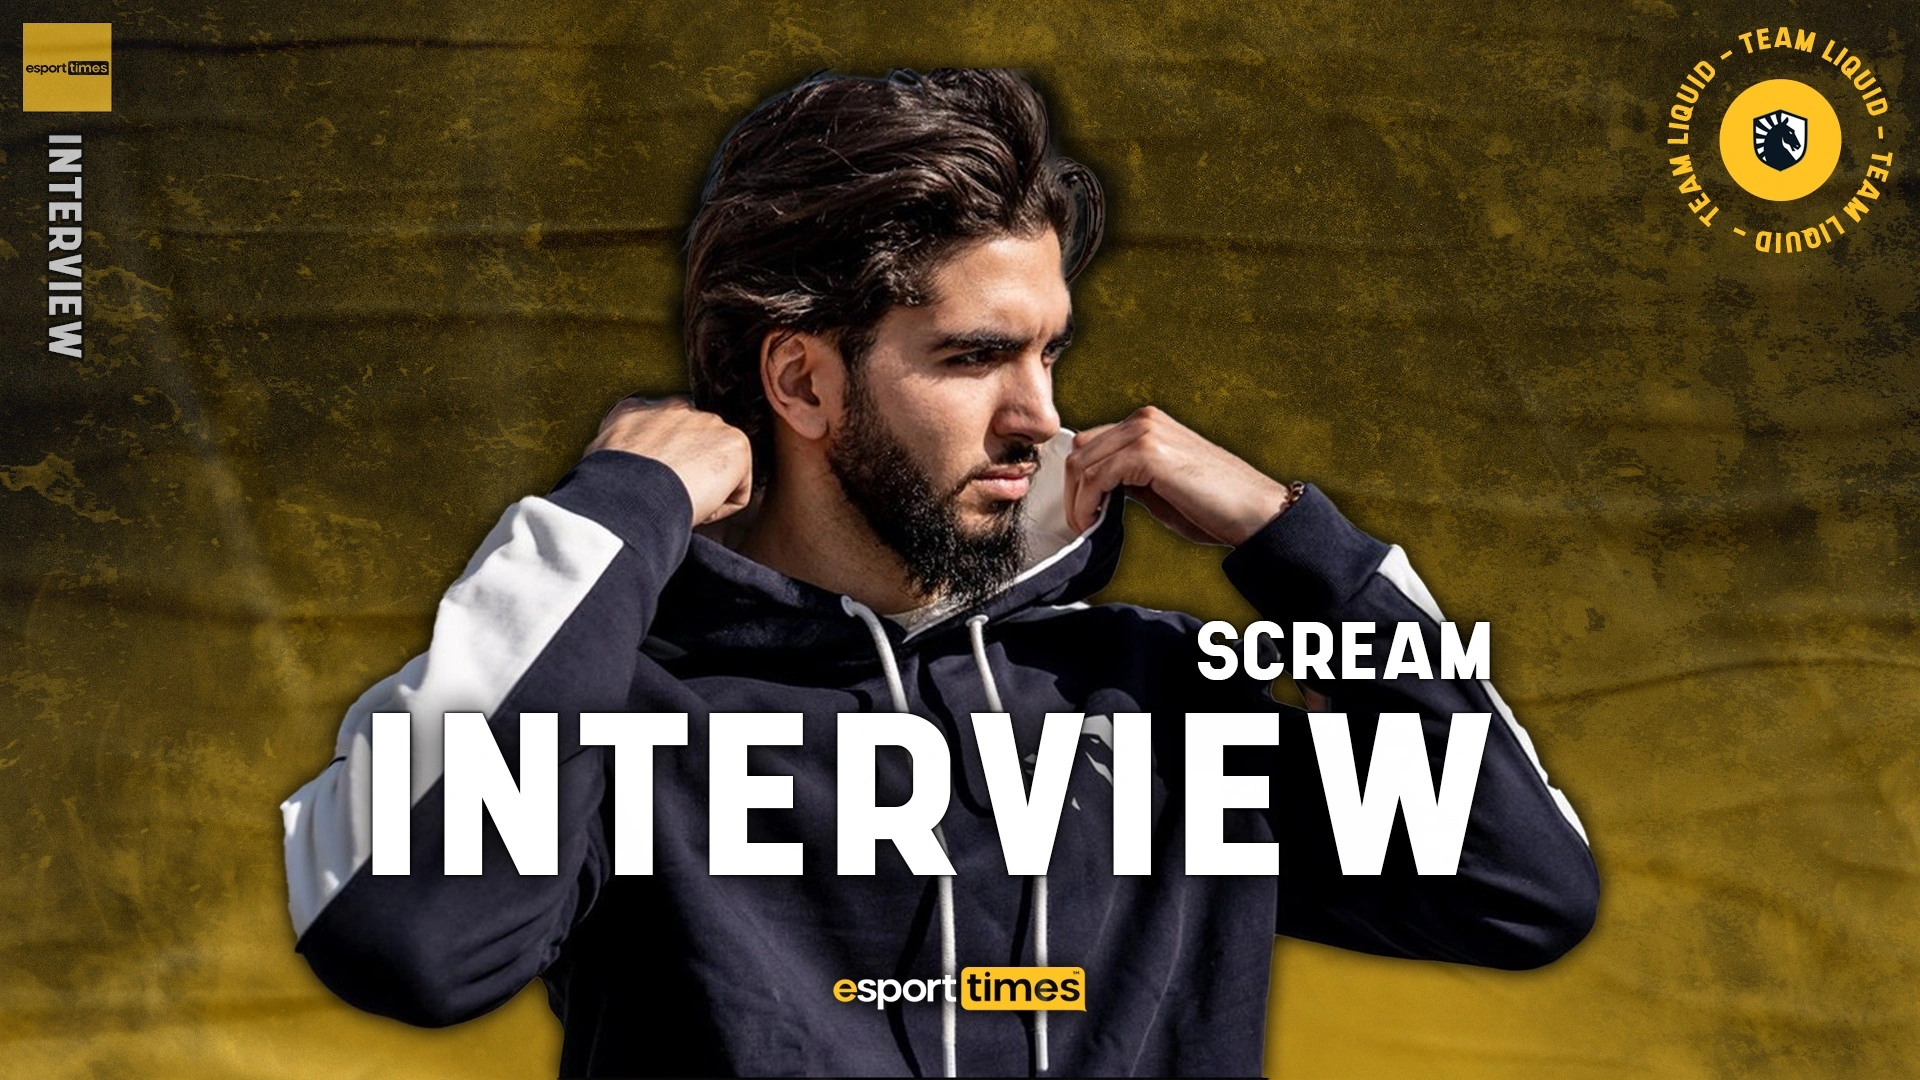 scream-interview esportimes